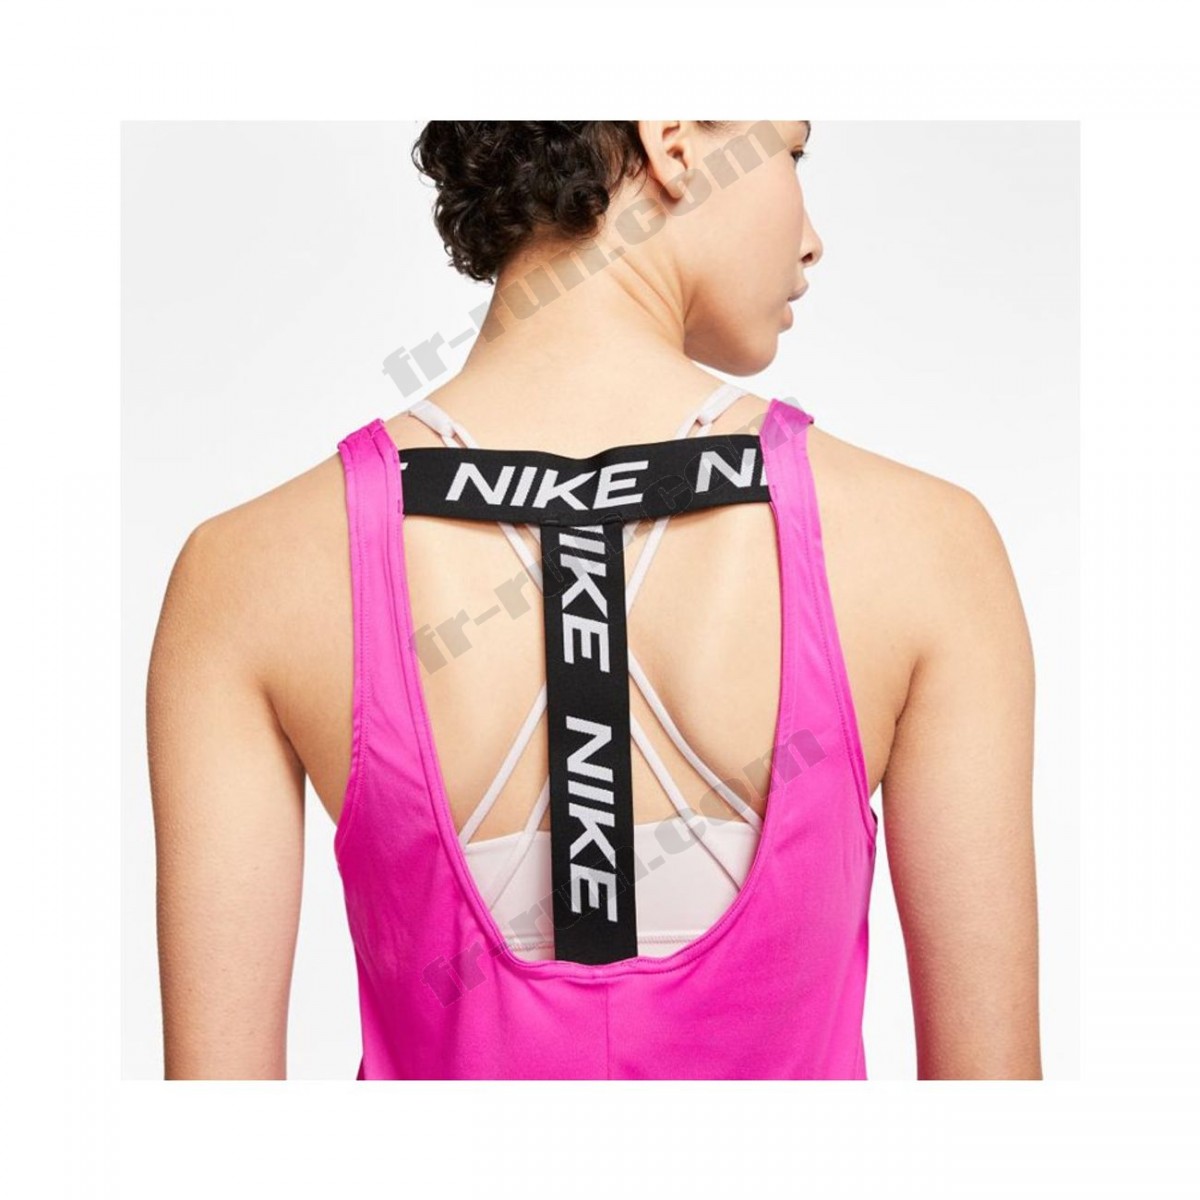 Nike/running femme NIKE Nike Wmns Dry Victory Elastika Top ◇◇◇ Pas Cher Du Tout - -4